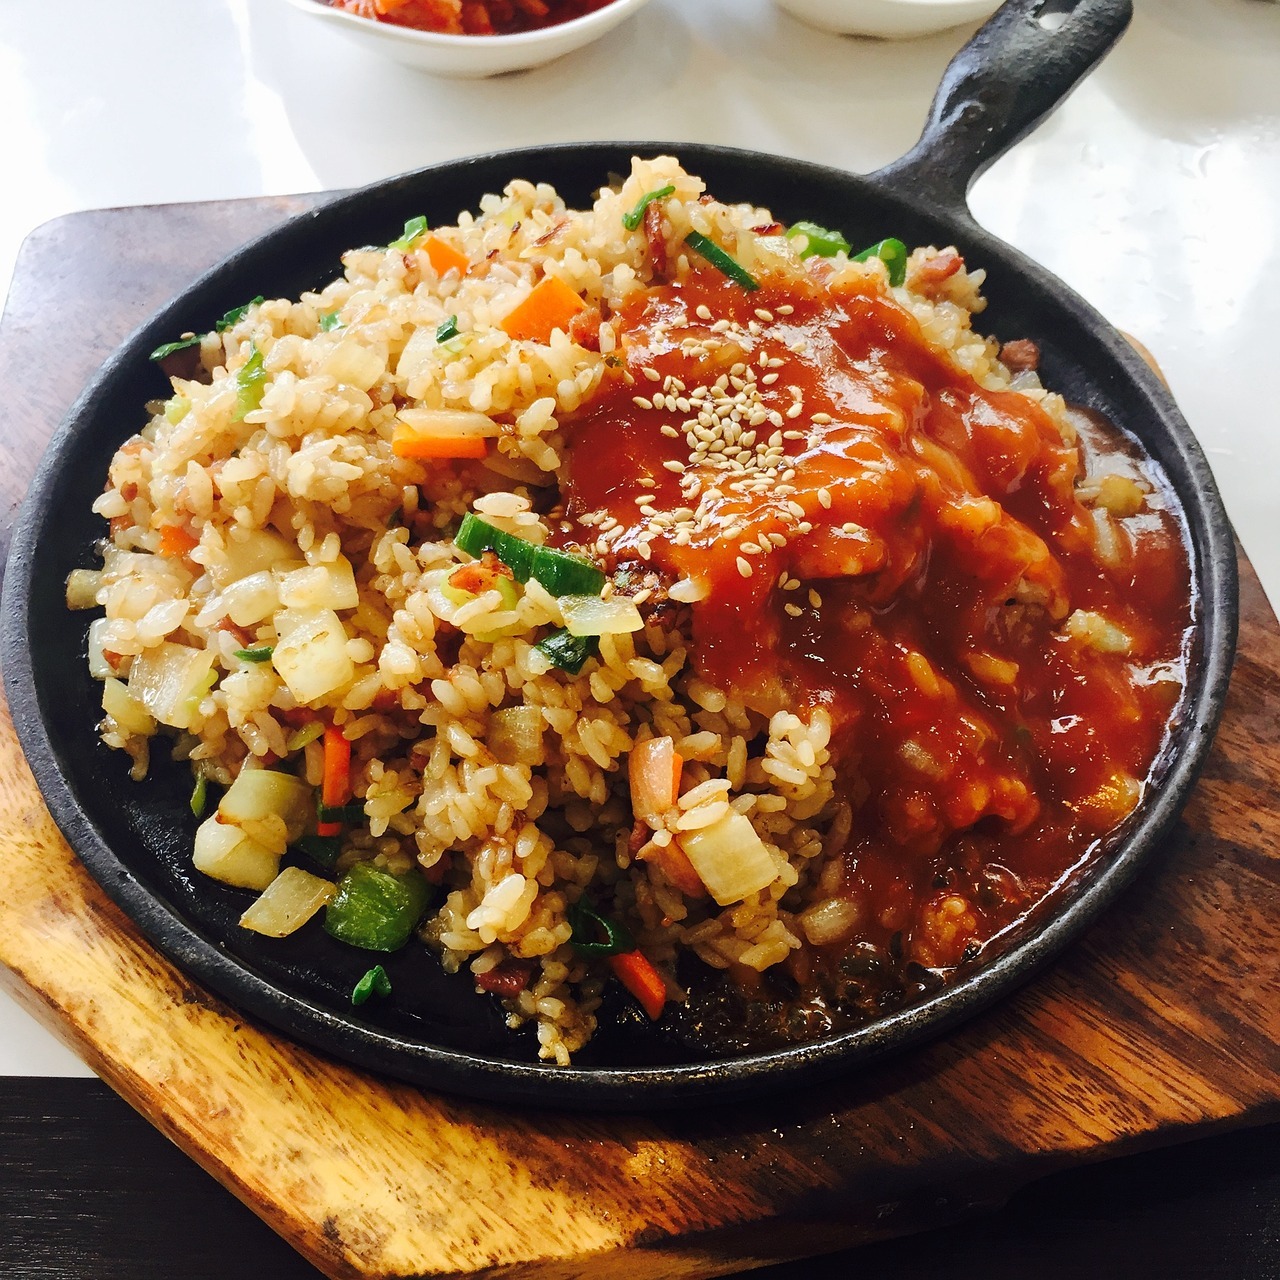 Baekban - Set Menu with Rice and Side Dishes (Restaurant Menu)